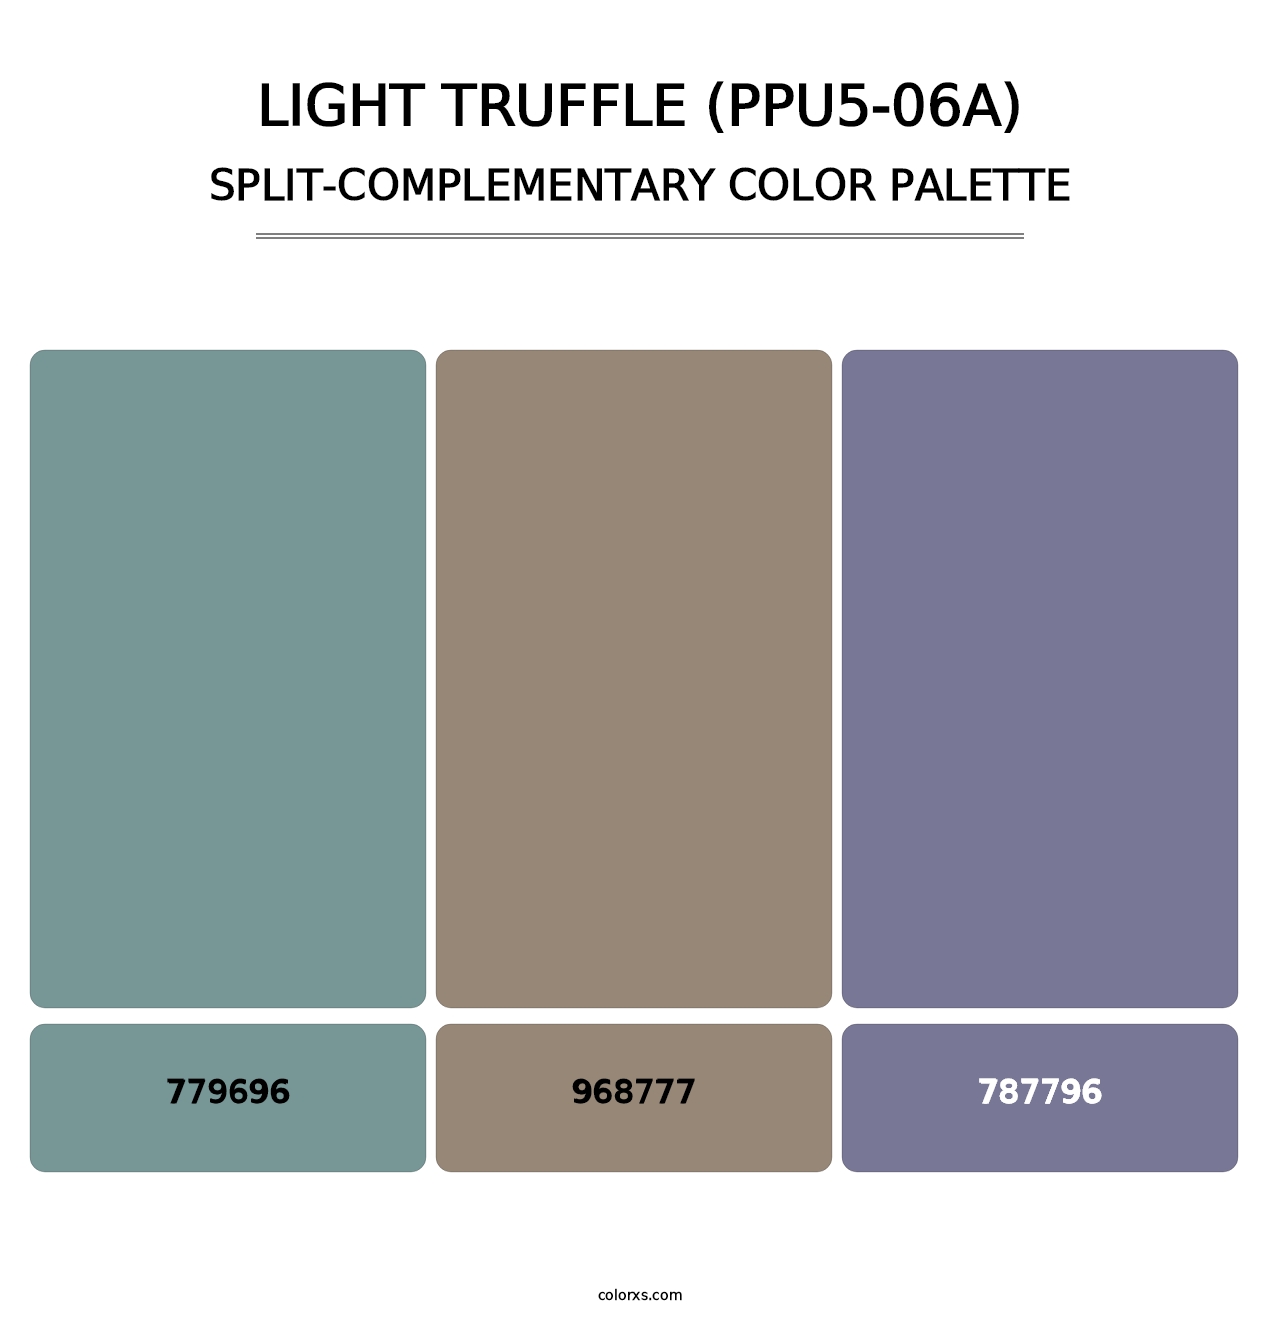 Light Truffle (PPU5-06A) - Split-Complementary Color Palette